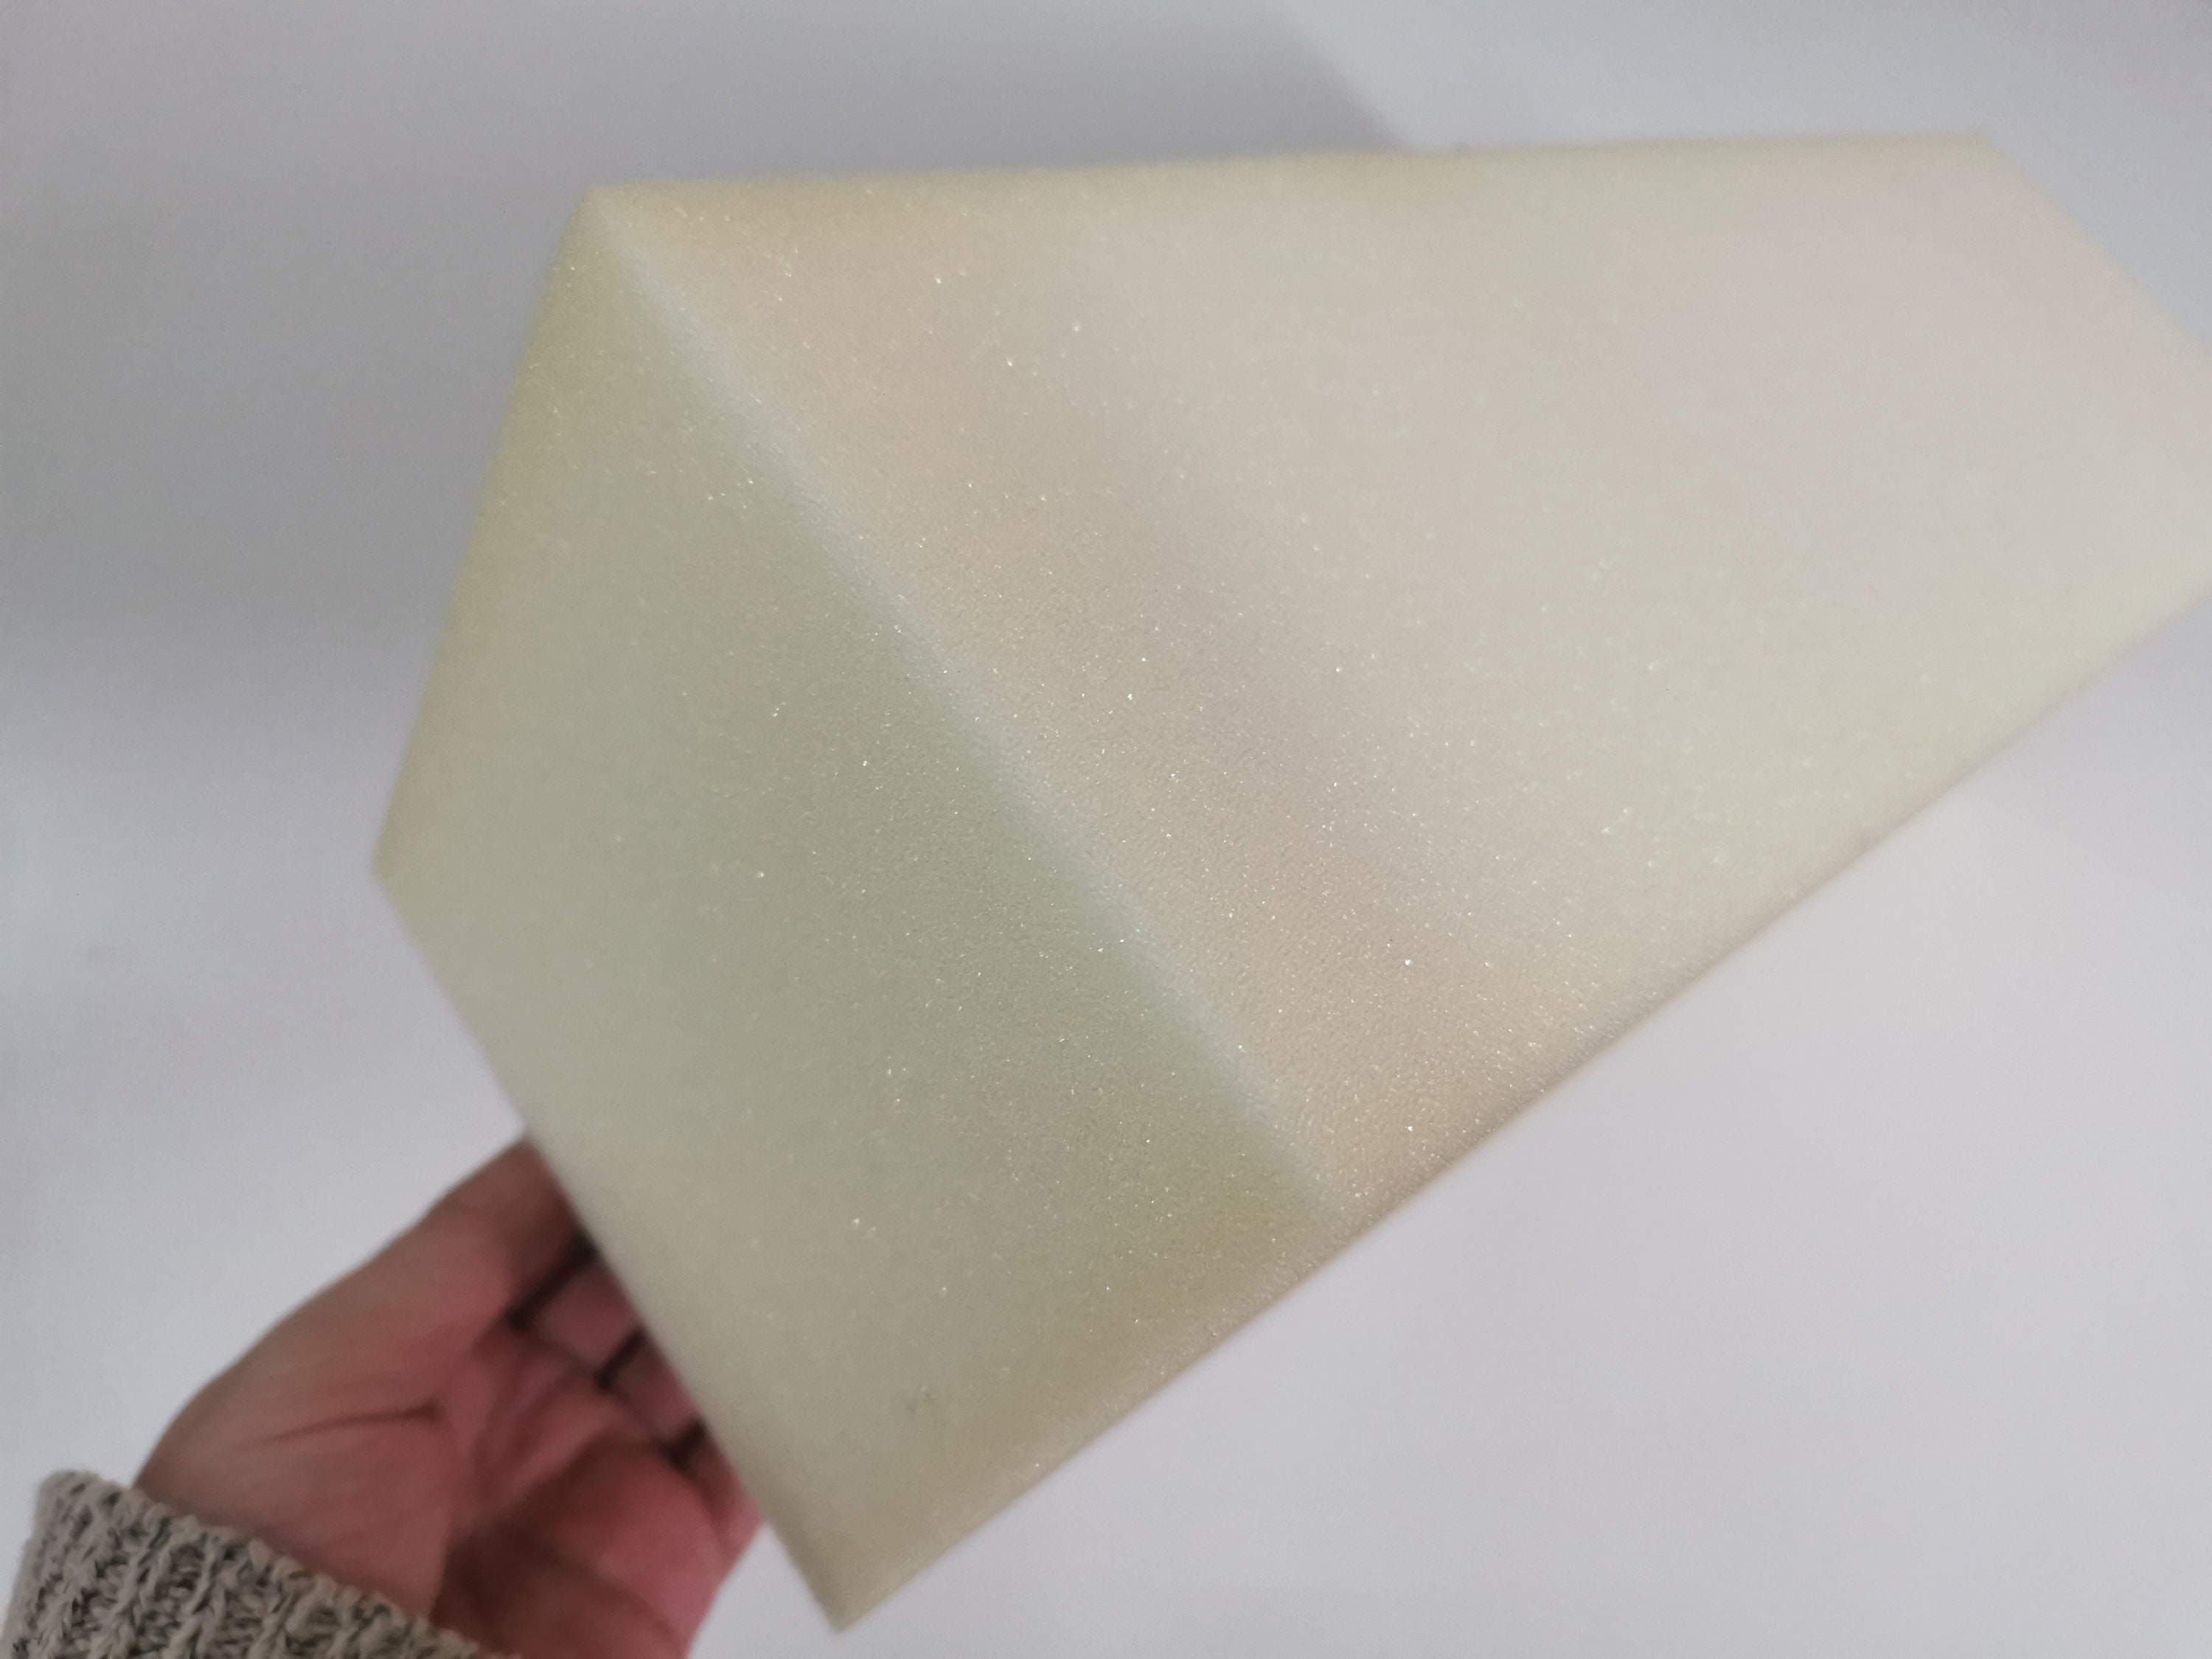 Foam Ninja Polyethylene Foam Sheet 12 x 16 x 1 Inch Thick - 2 Pack White -  Foam Inserts High Density Closed Cell PE Case Packaging Shipping